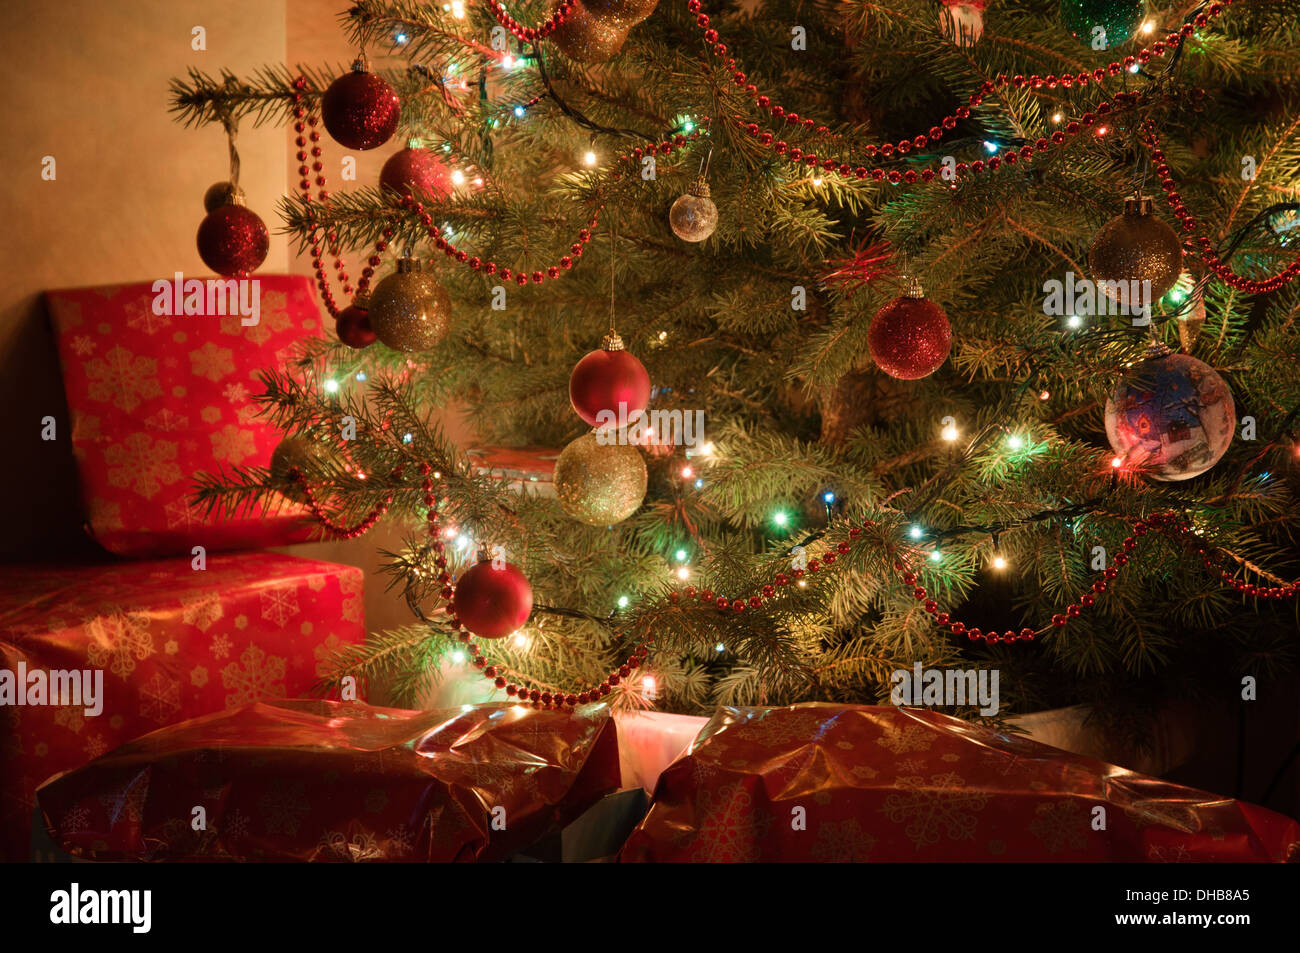 Illuminated Christmas tree at night with presents- part of tree Stock Photo